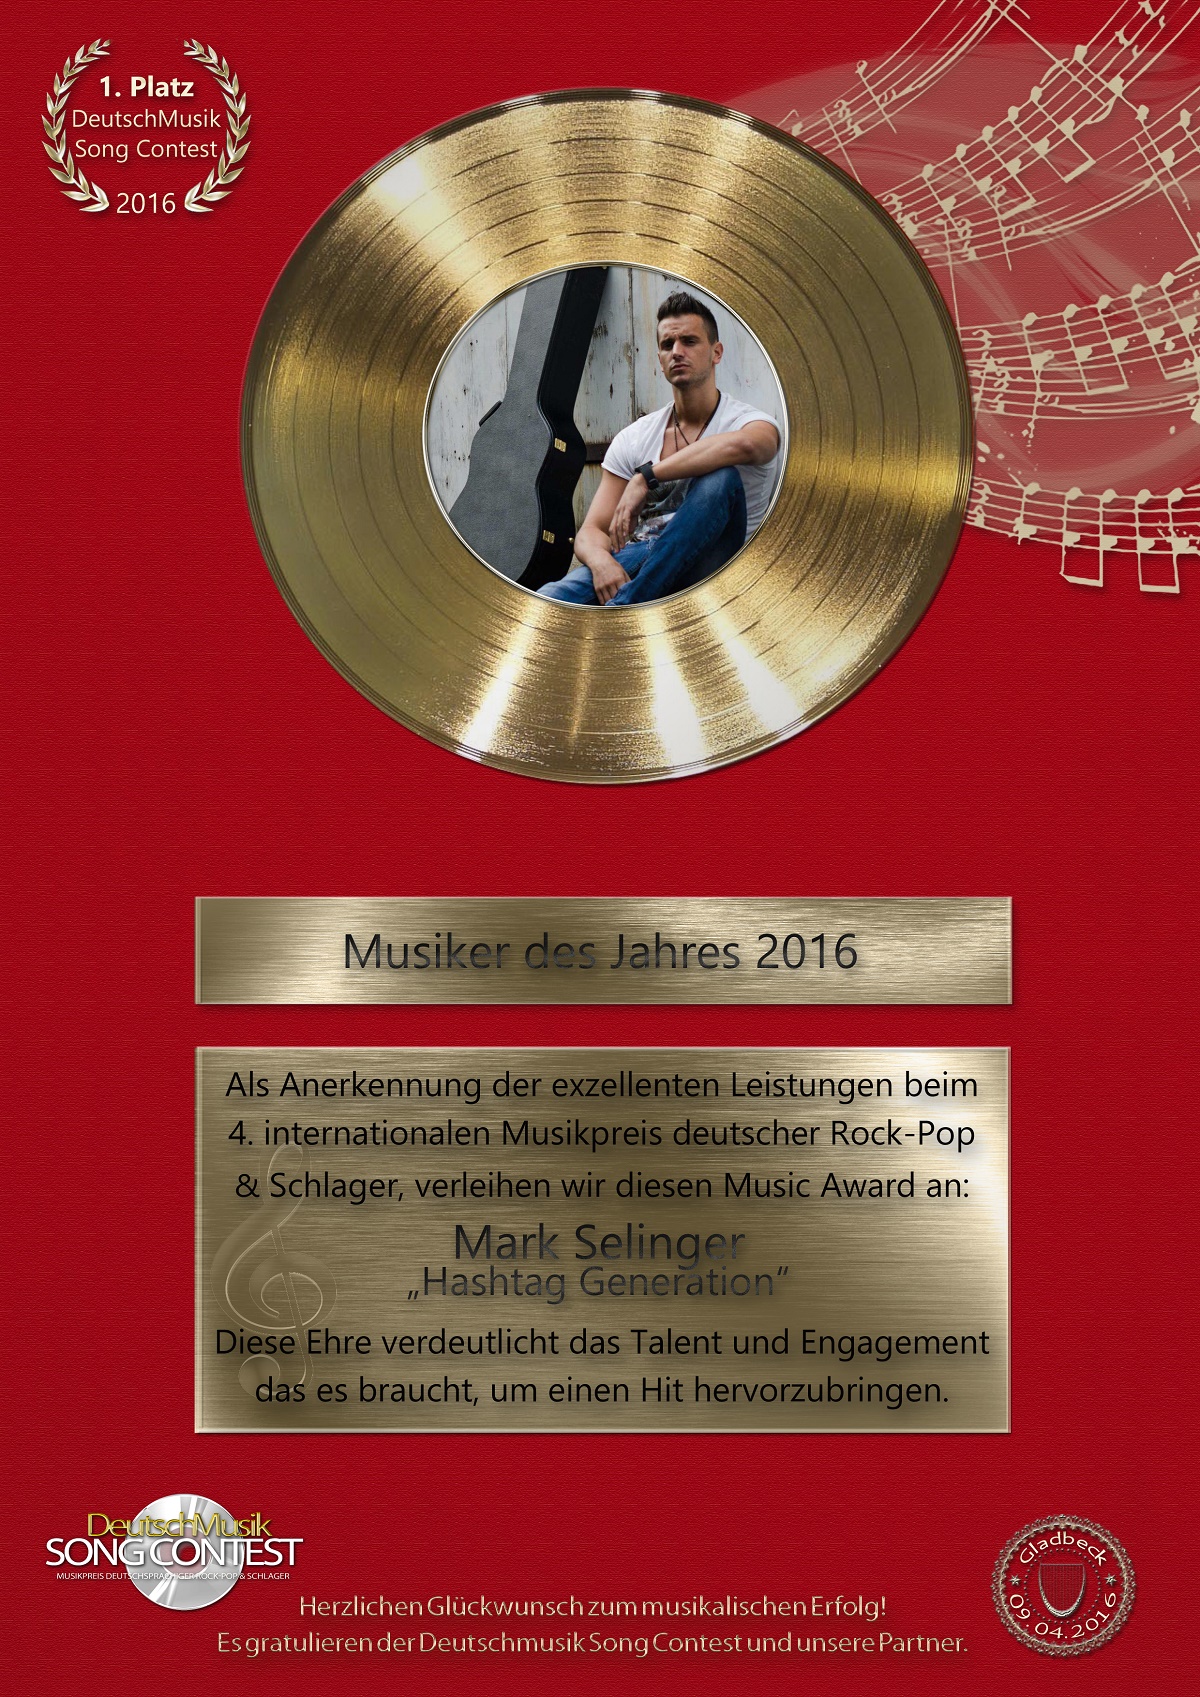 gold-award-deutschmusik-song-contest-2016-mark-selinger